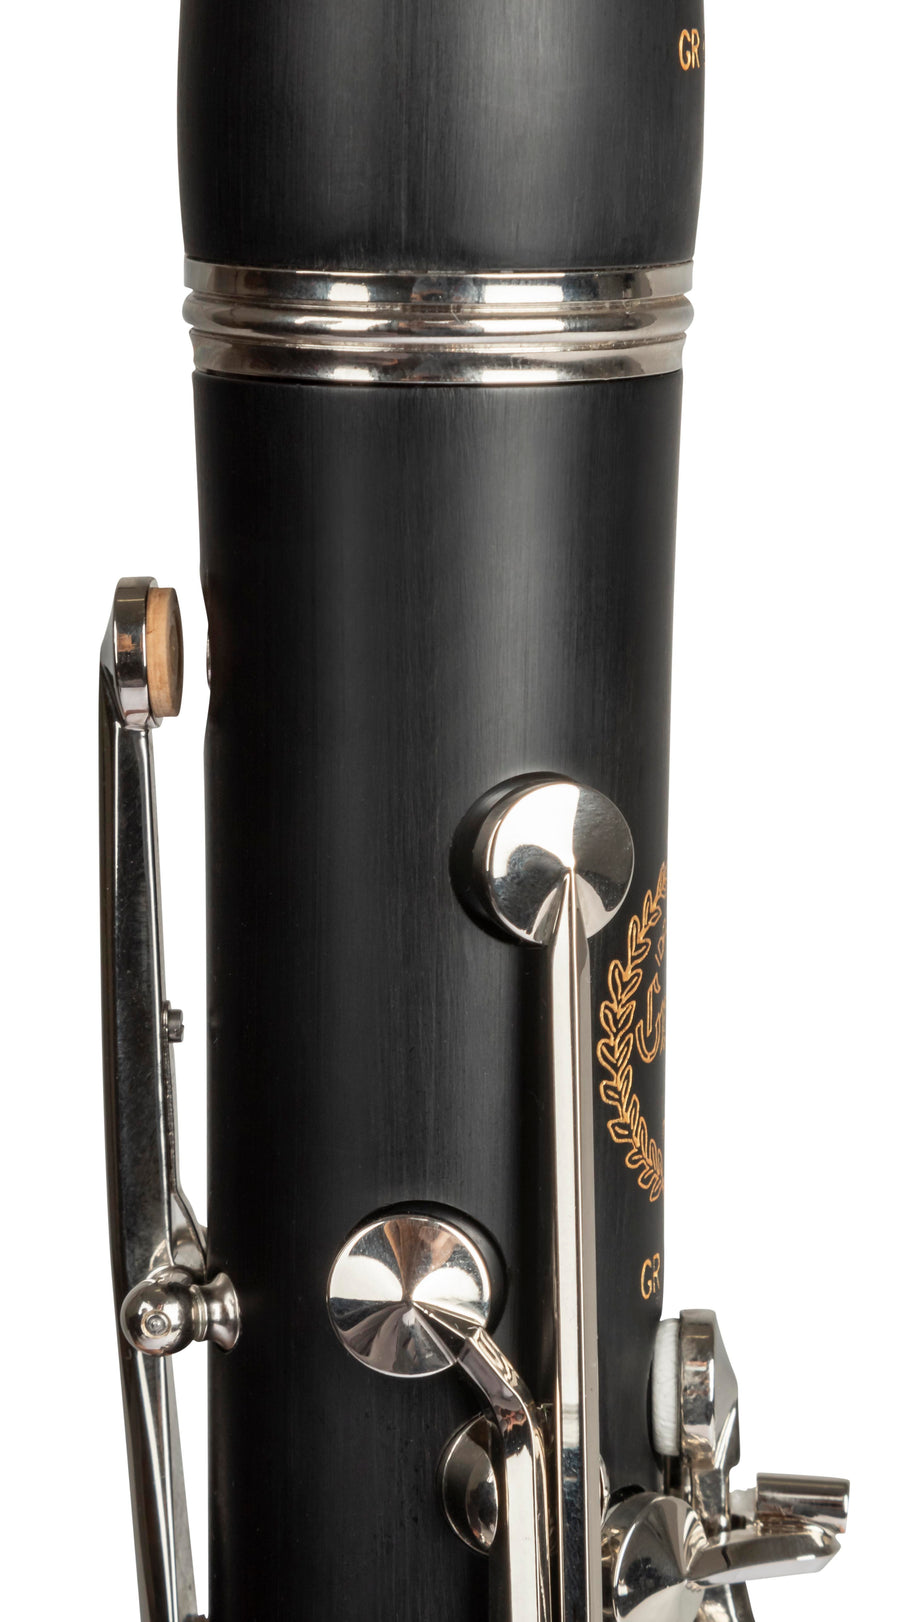 Grassi GR CL300 Clarinet in Bb 17 Keys Pisoni Pads ABS Body Wood Like Finish Black (Master Series)